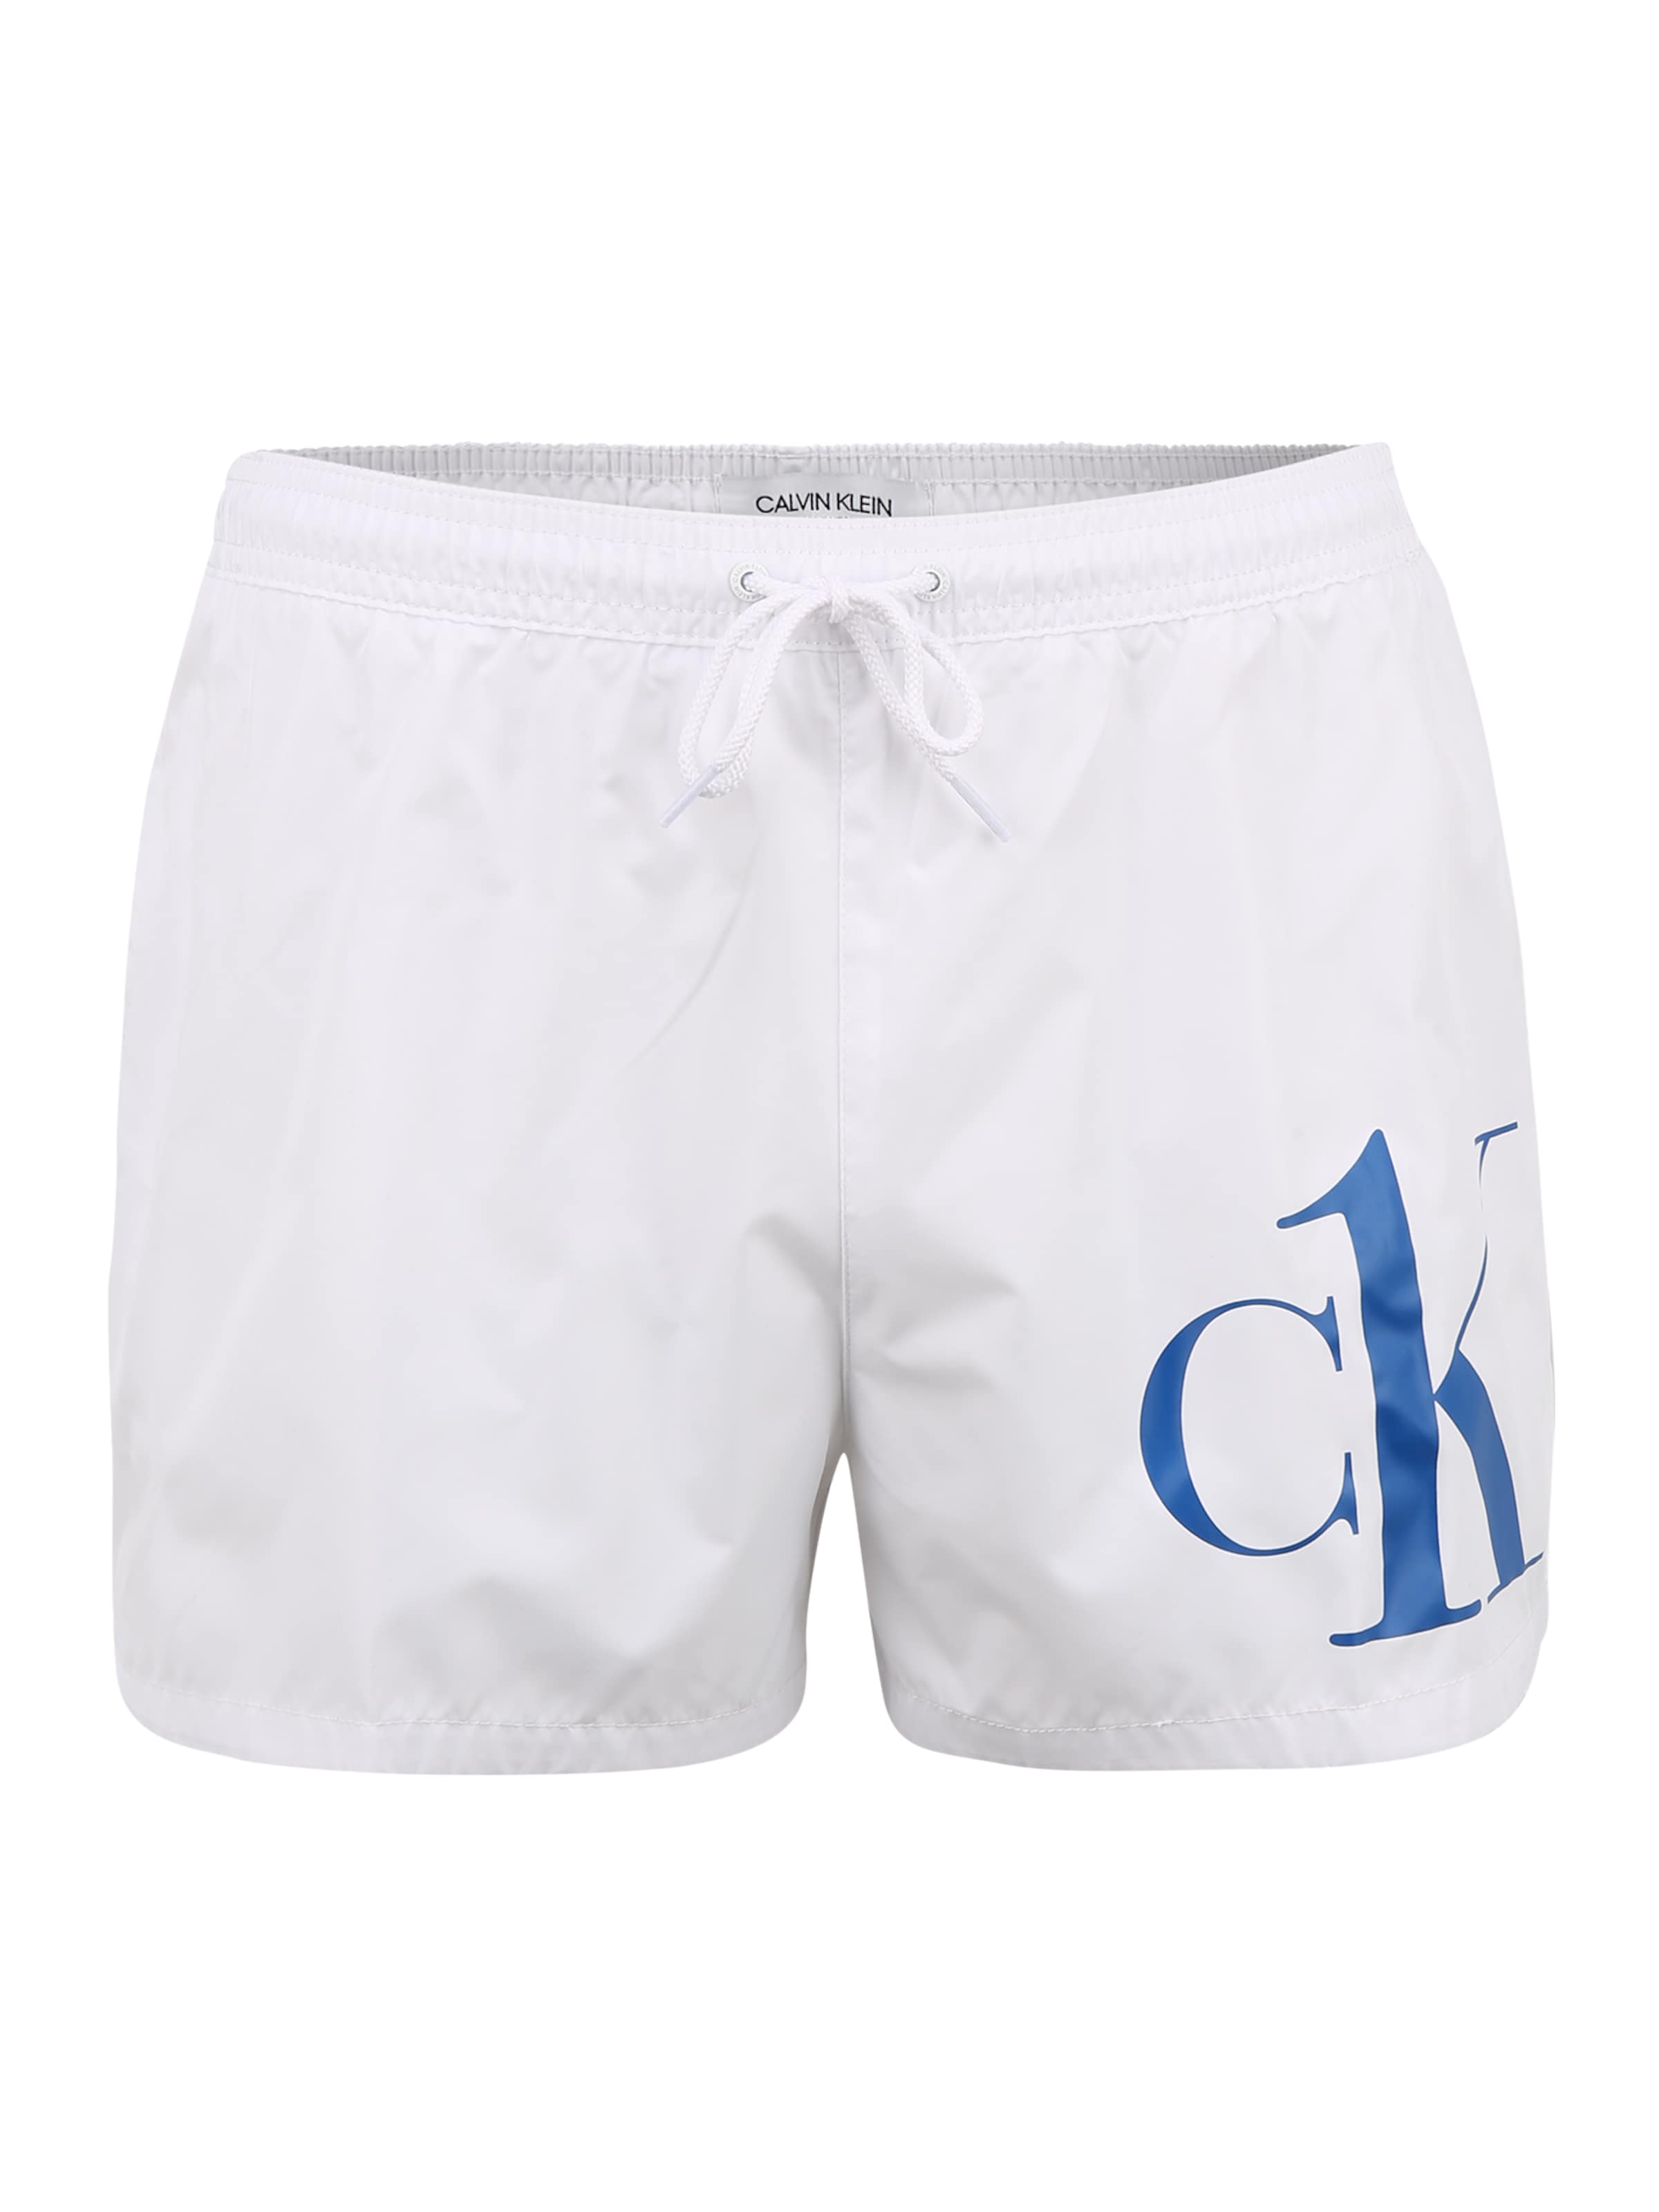 Moda mare rzGOj Calvin Klein Swimwear Pantaloncini da bagno in Bianco 